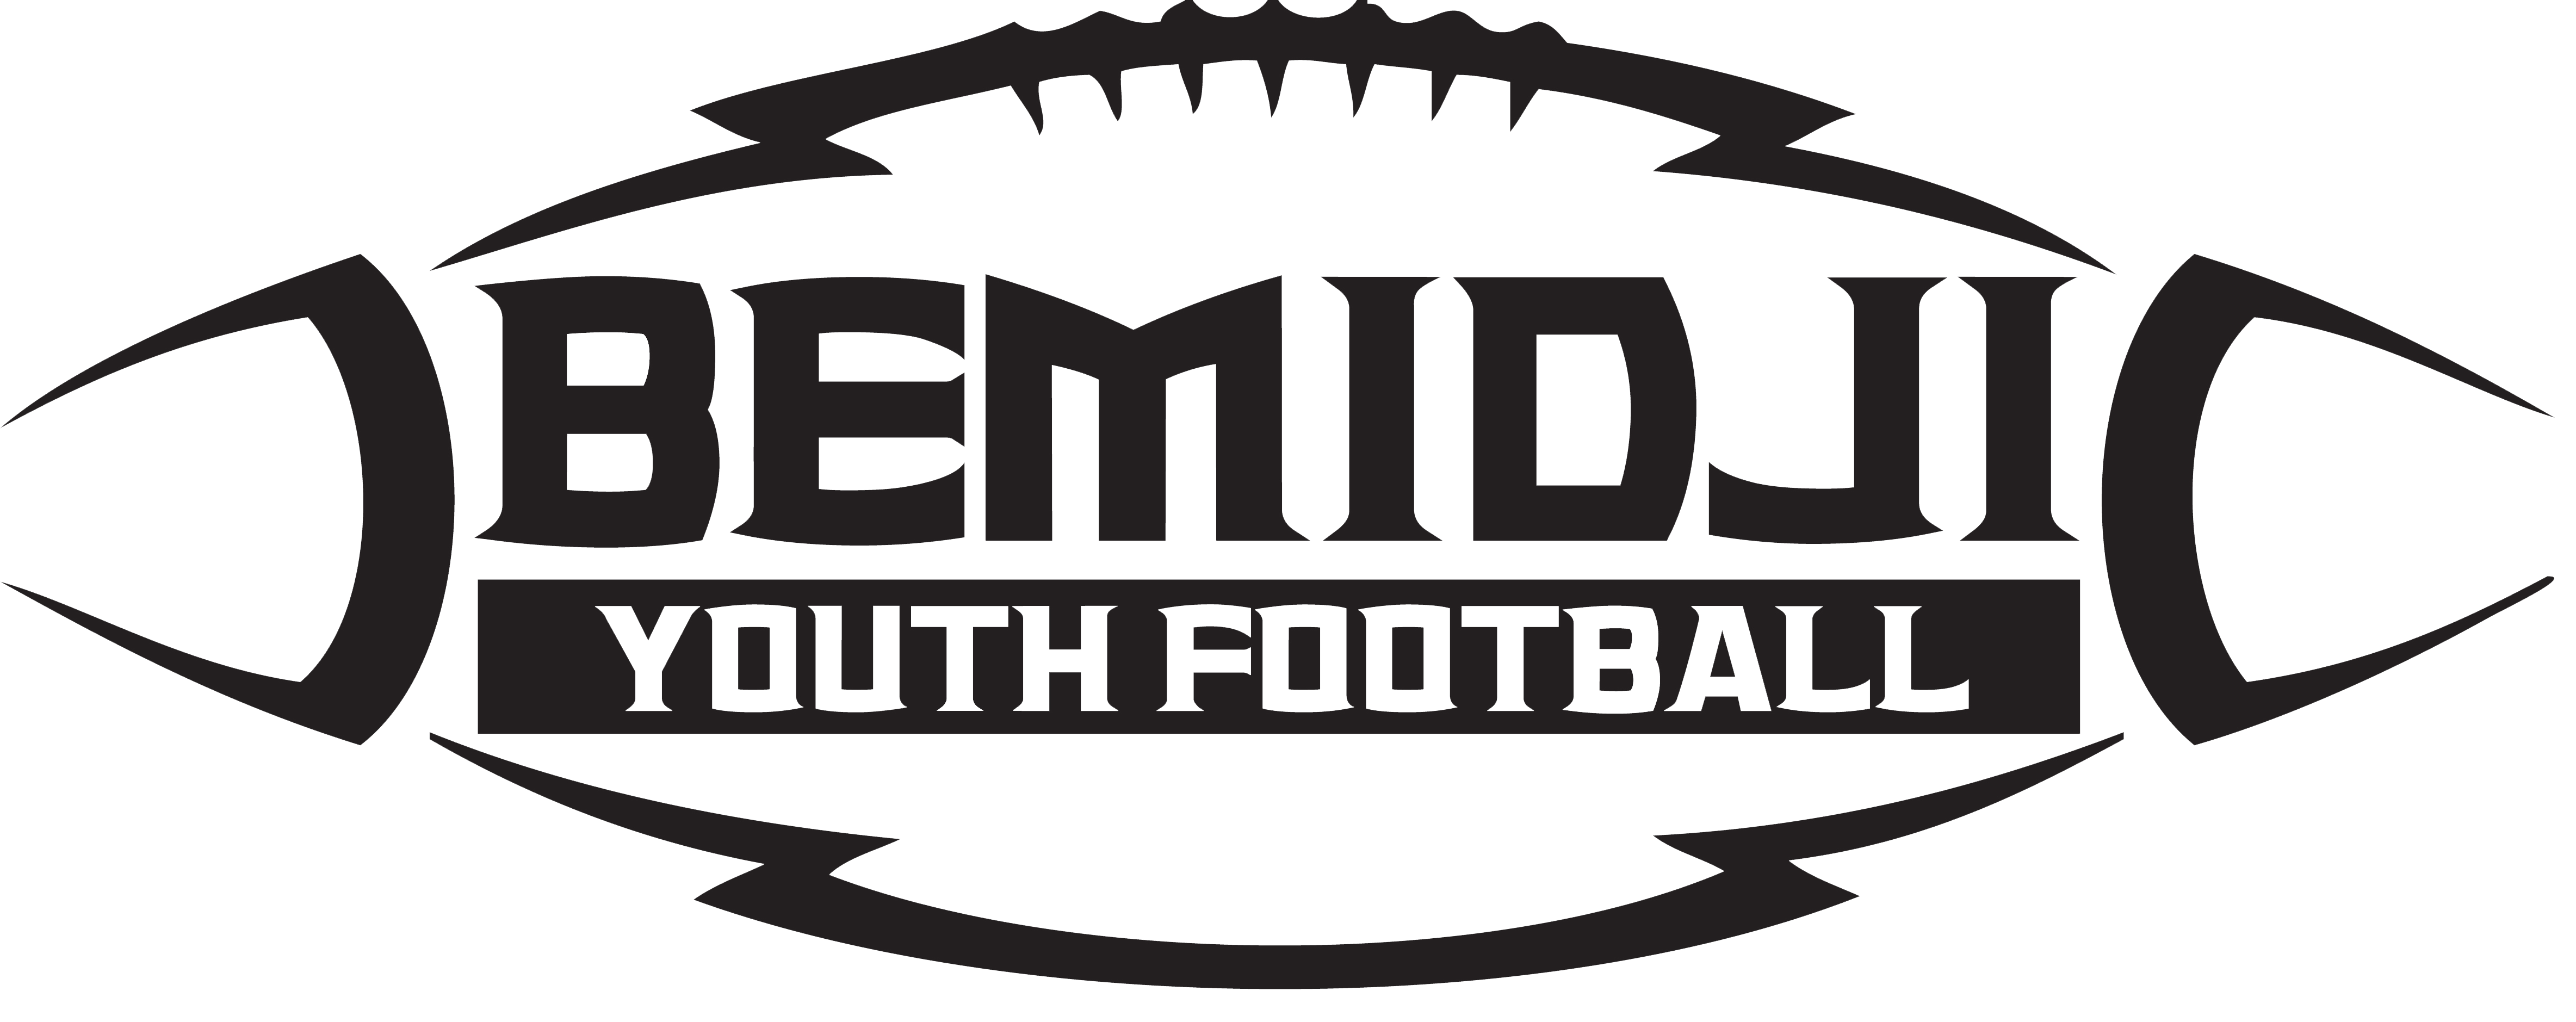 Bemidji Youth Football